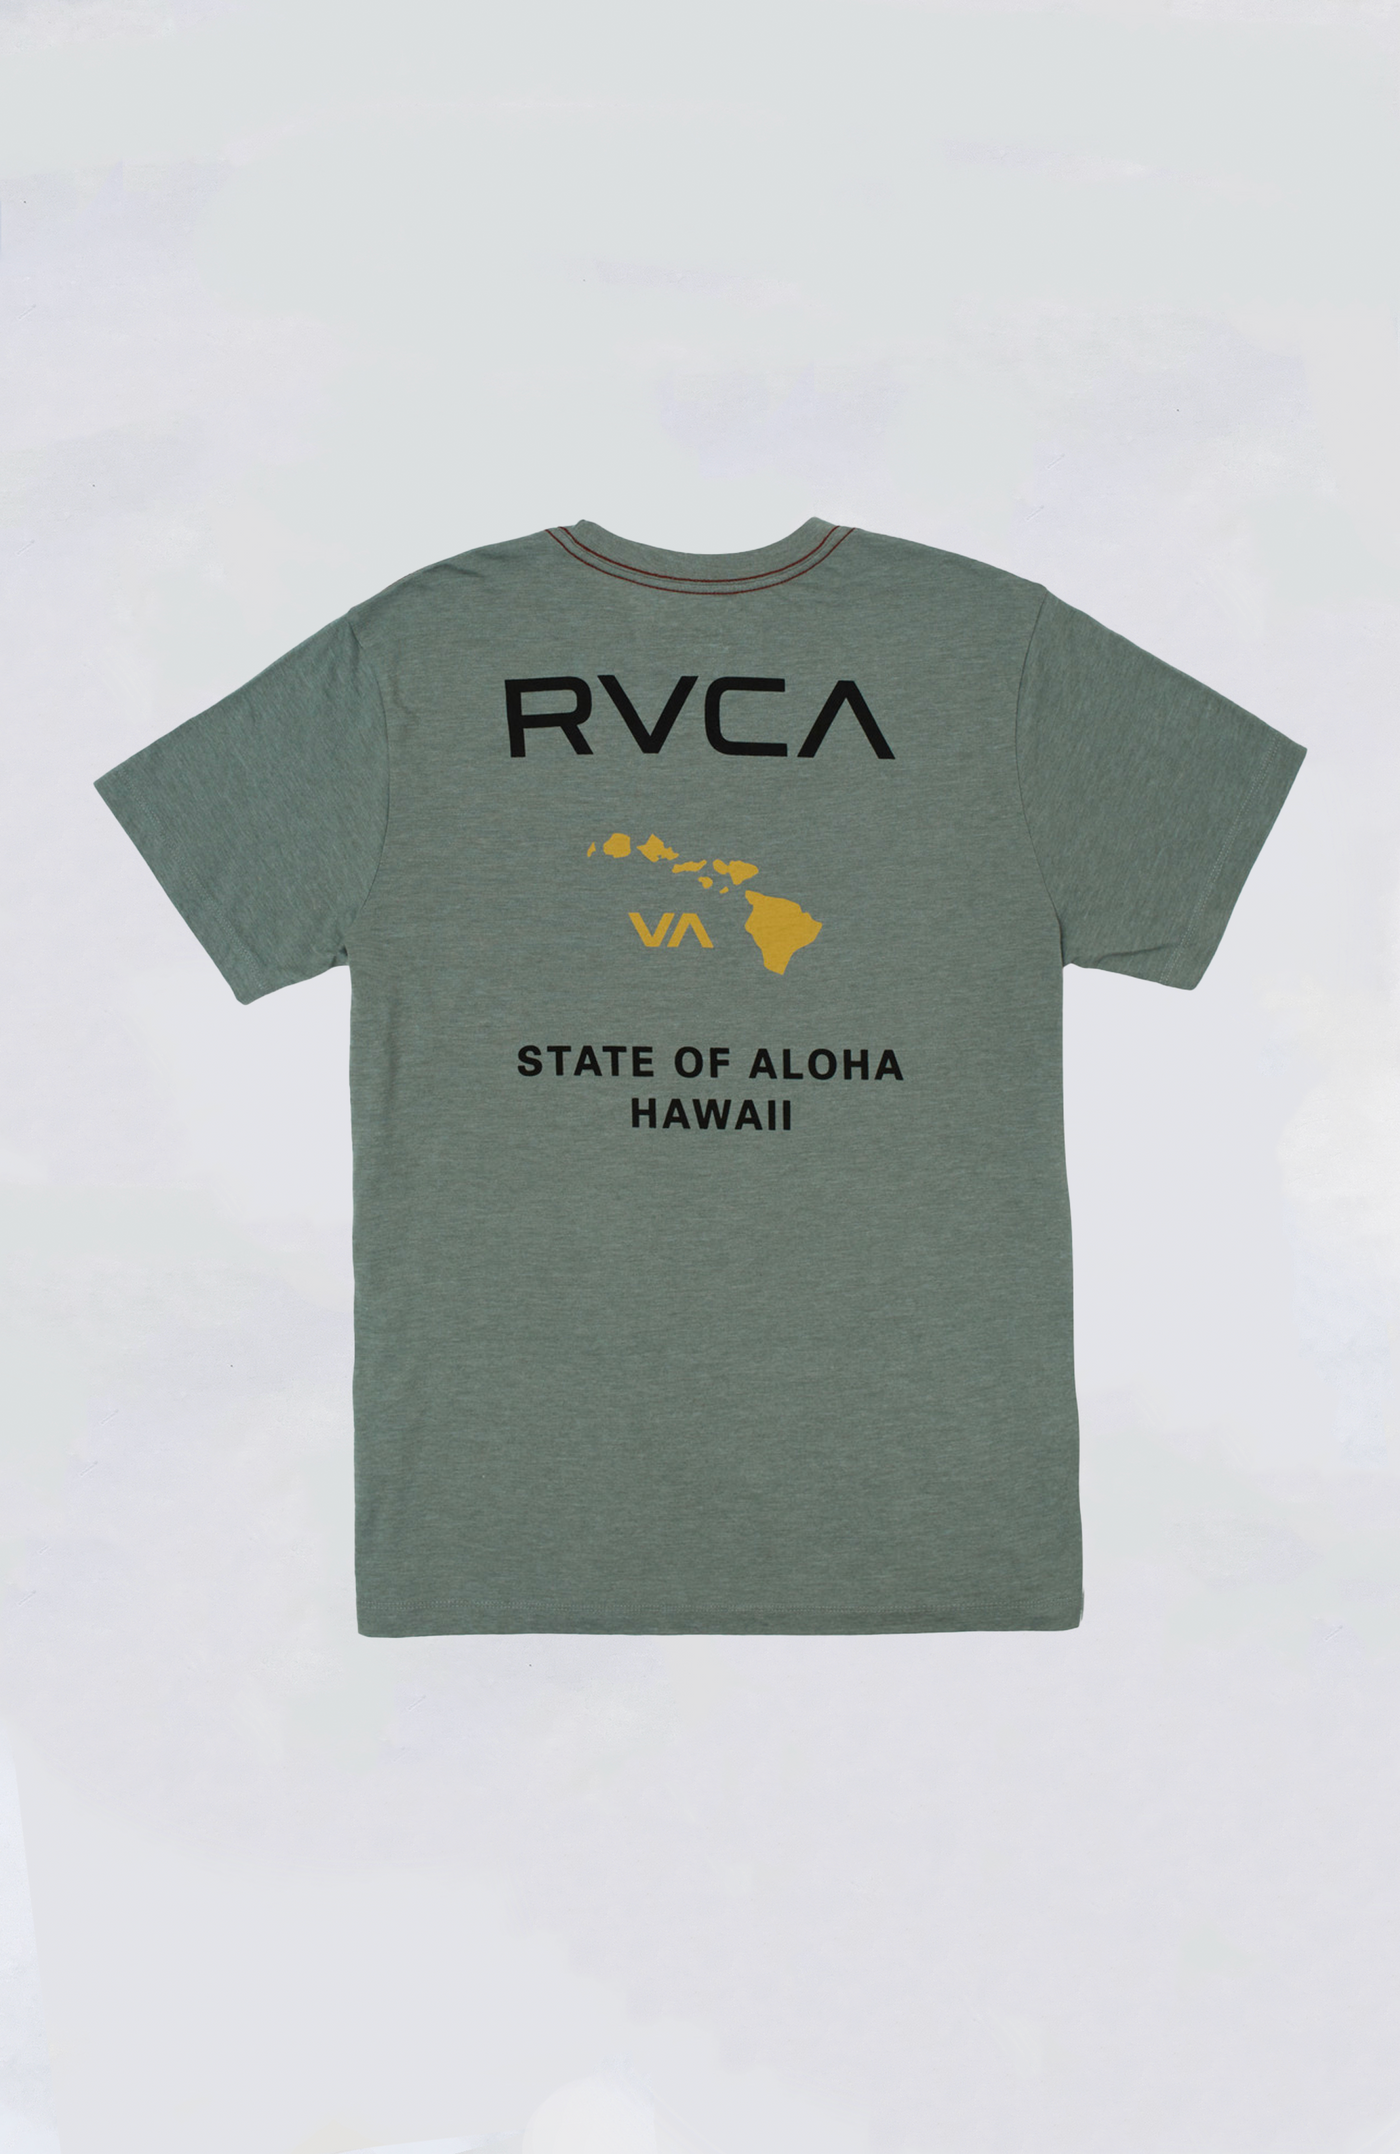 RVCA Tee - State of Aloha Tee